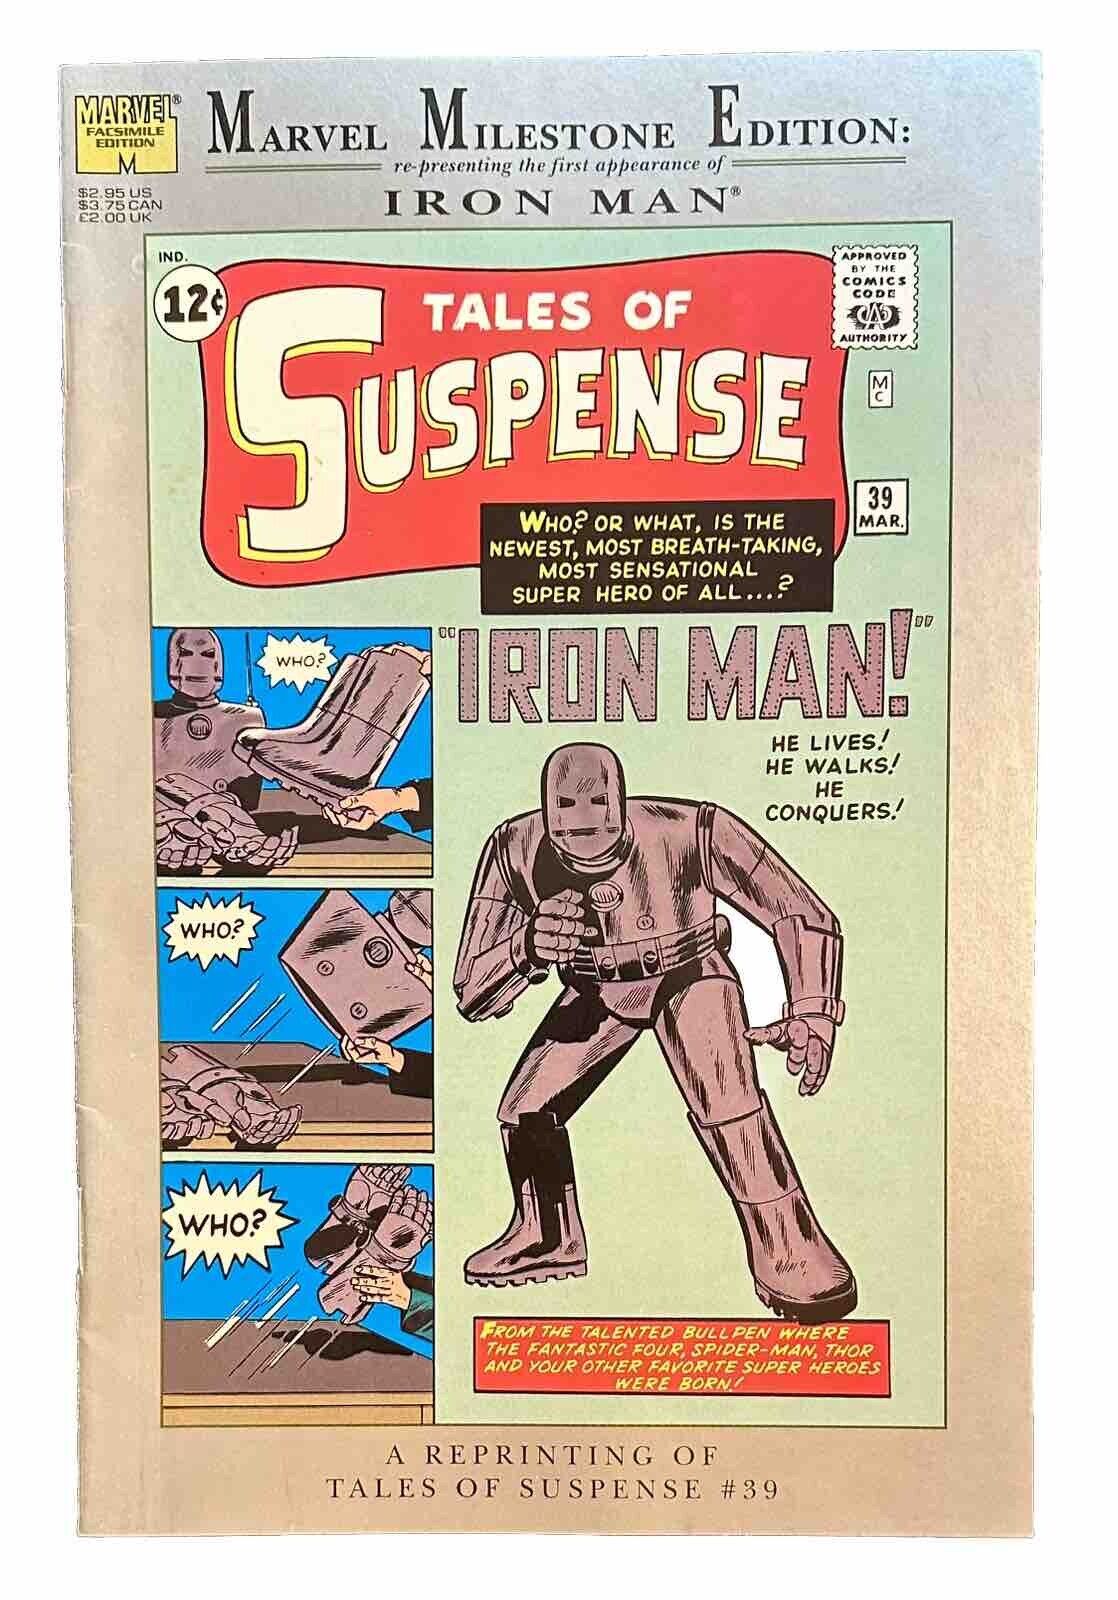 Marvel Milestone Edition: Tales of Suspense #39 REPRINT Iron Man Comic